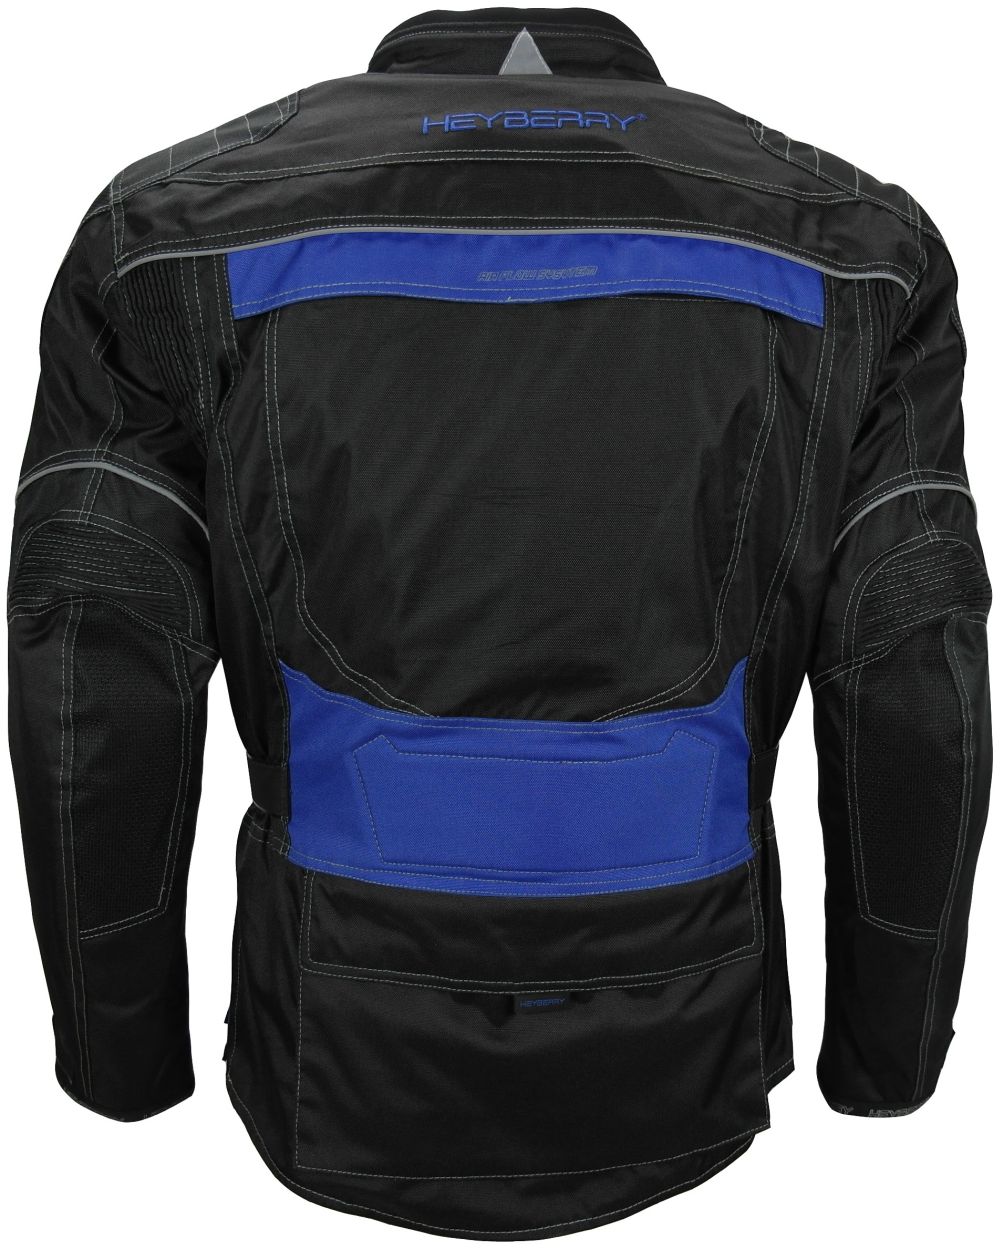 Heyberry Touren Motorrad Jacke Motorradjacke Textil schwarz blau M - 3XL